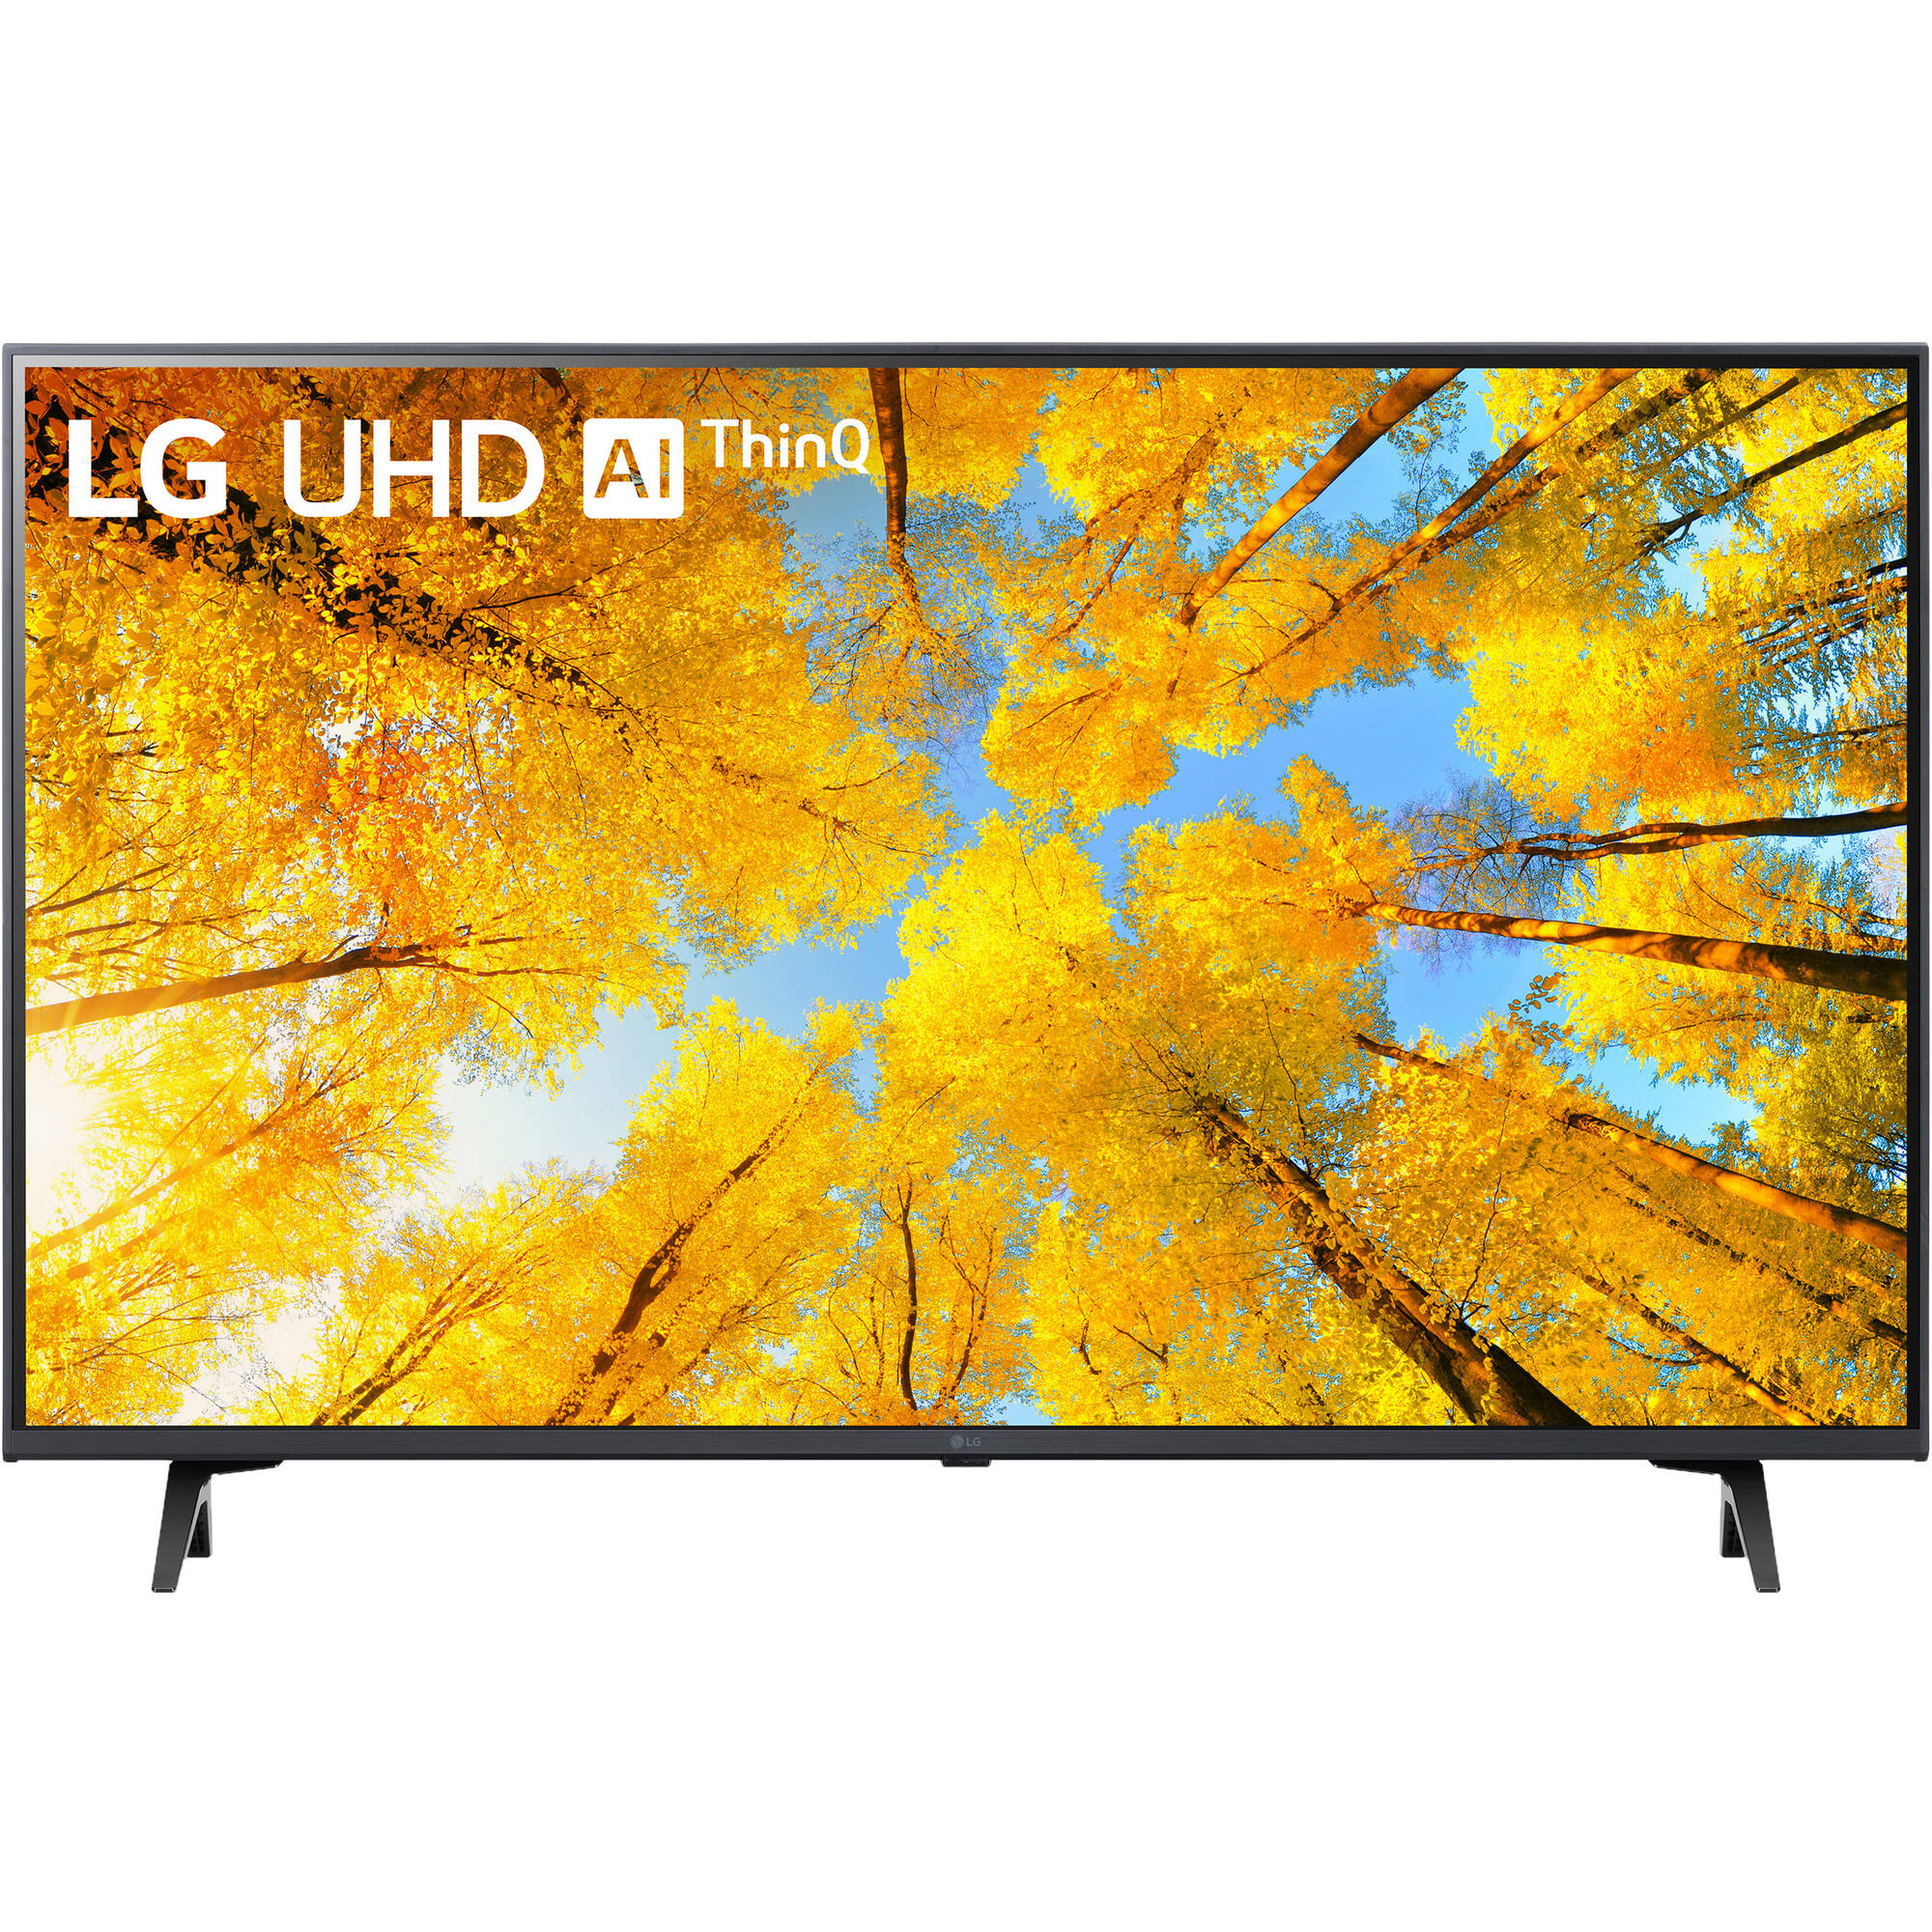 LG UQ7590PUB 43 "HDR 4K UHD LED TV